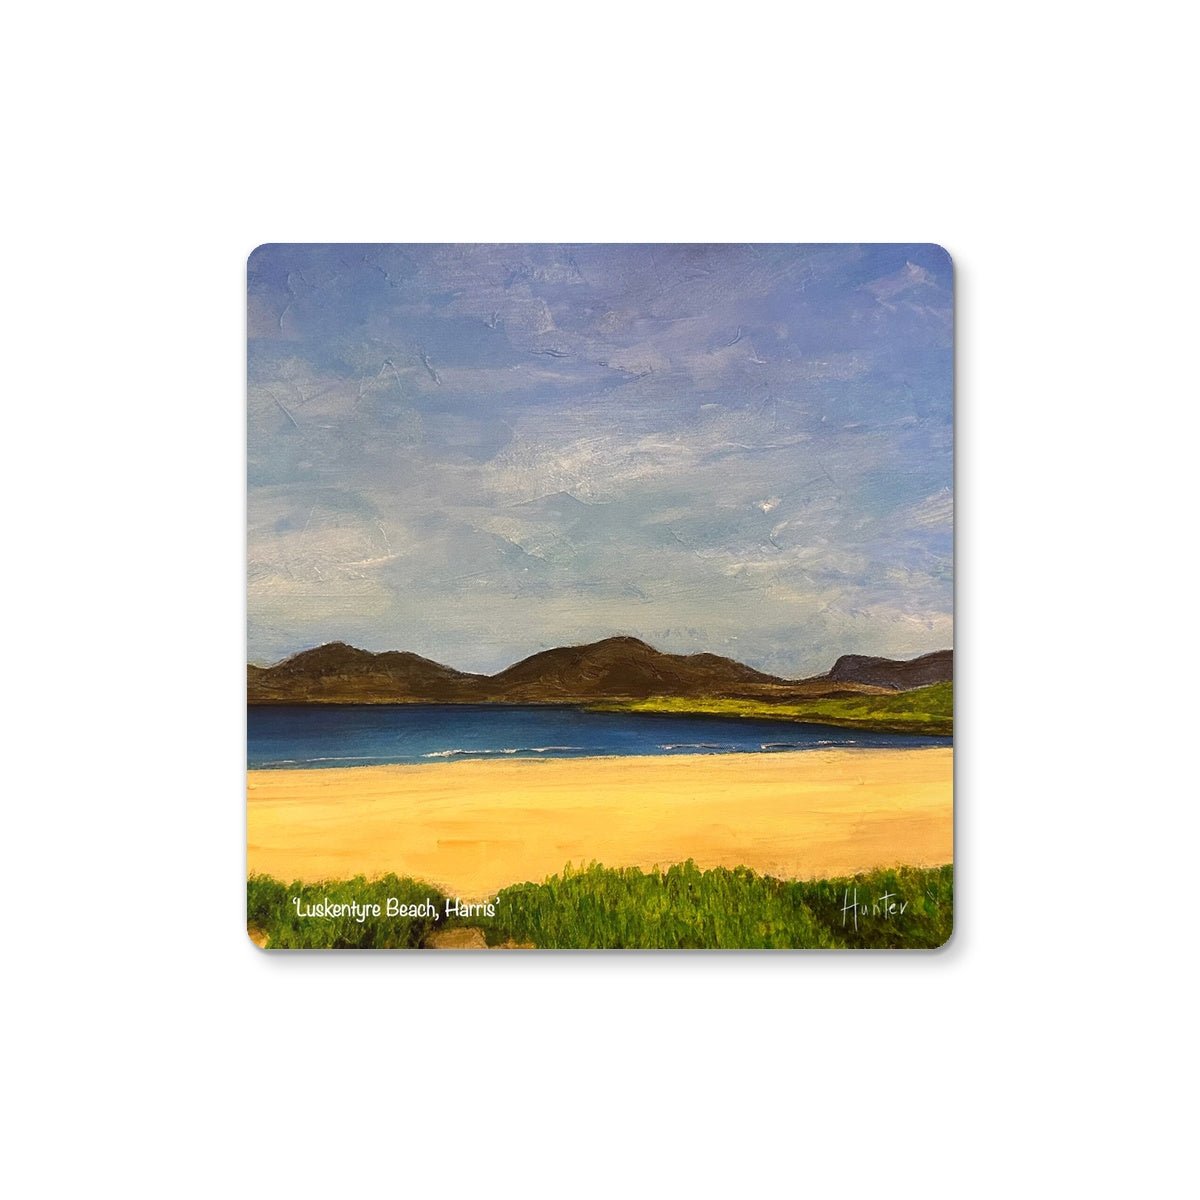 Luskentyre Beach Harris Art Gifts Coaster-Coasters-Hebridean Islands Art Gallery-4 Coasters-Paintings, Prints, Homeware, Art Gifts From Scotland By Scottish Artist Kevin Hunter